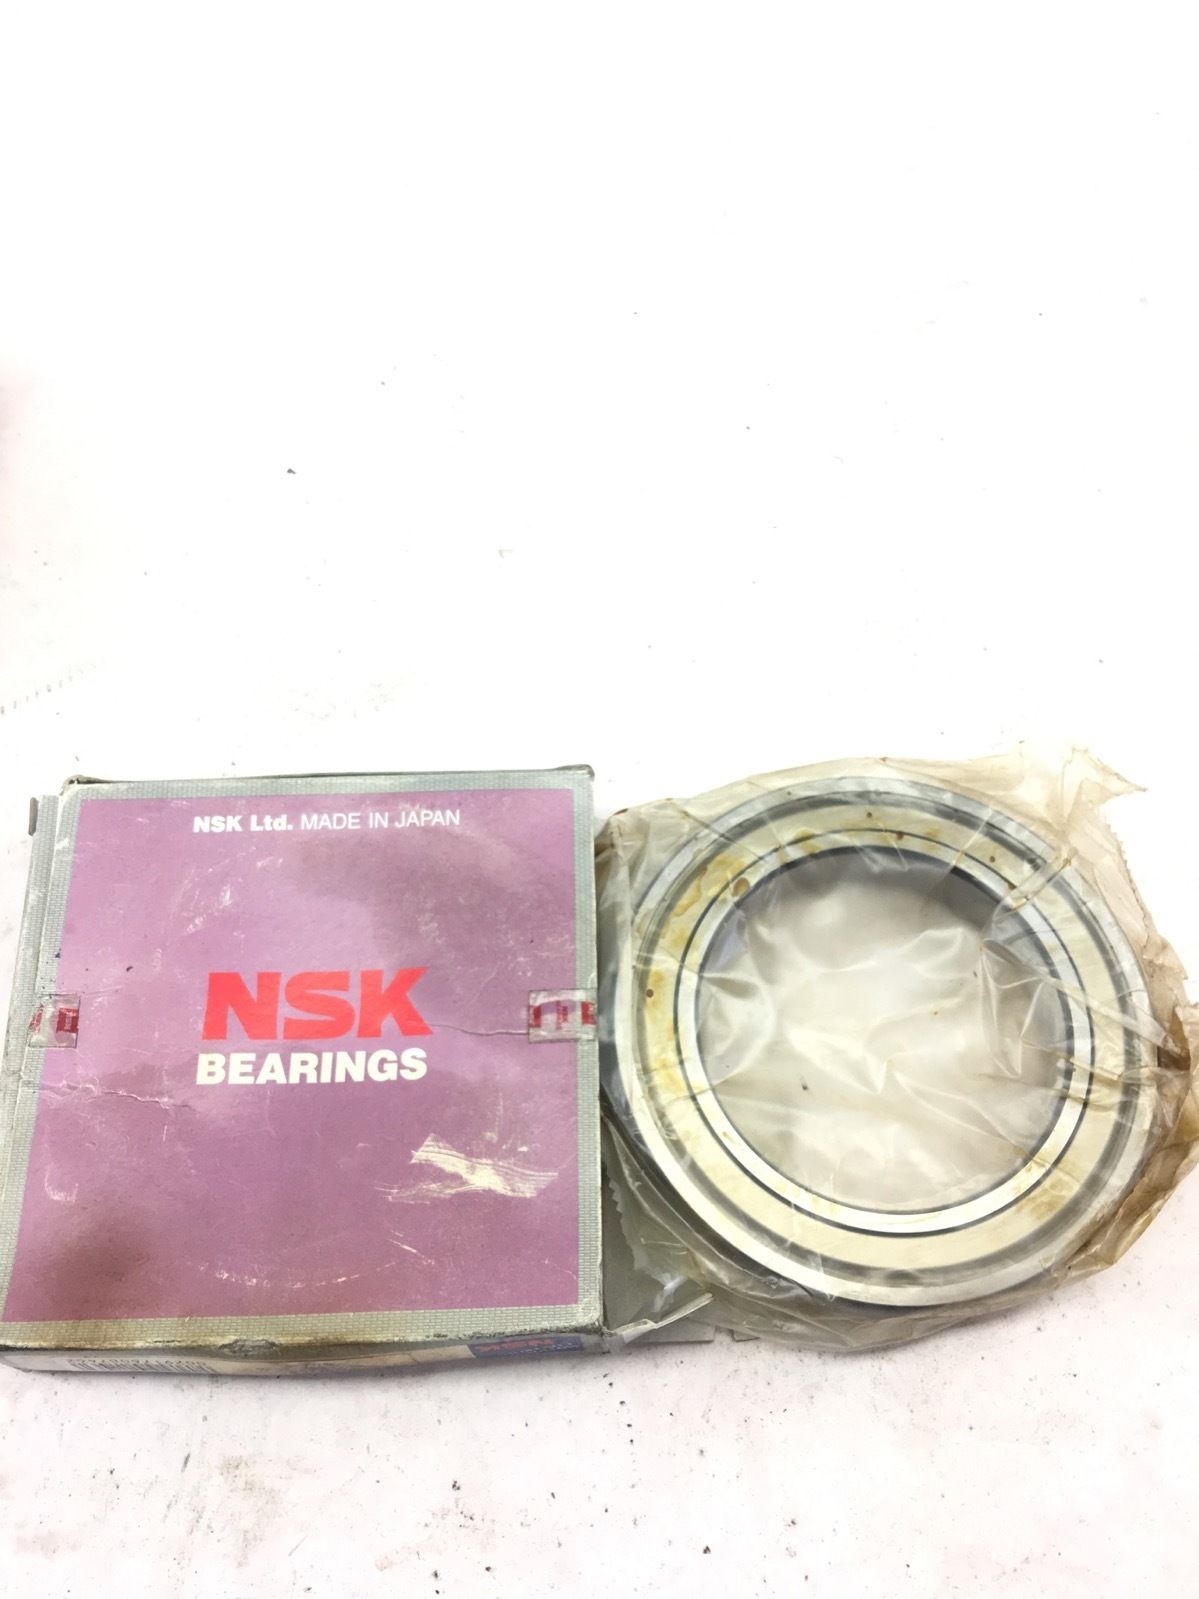 NEW IN BOXÂ NSK BEARINGS 6020ZZC3 Metal Shielded Deep Groove Ball Bearing, B377 1